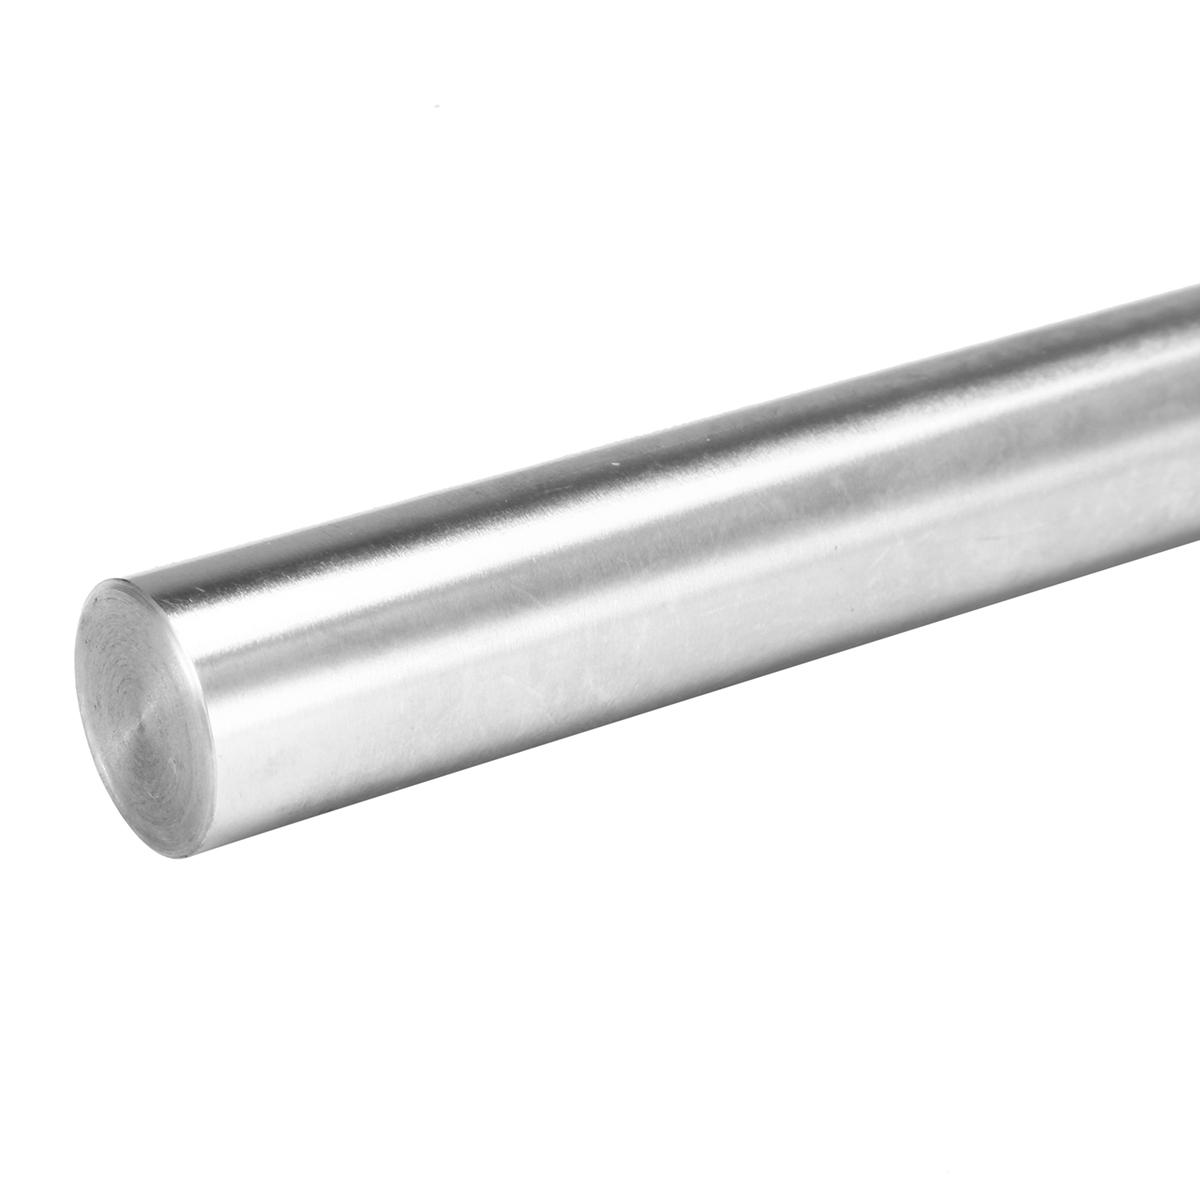 6mm/12mm 300mm Length Axis Chromed Smooth Rod Steel Linear Rail Shaft for 3D Printer 77